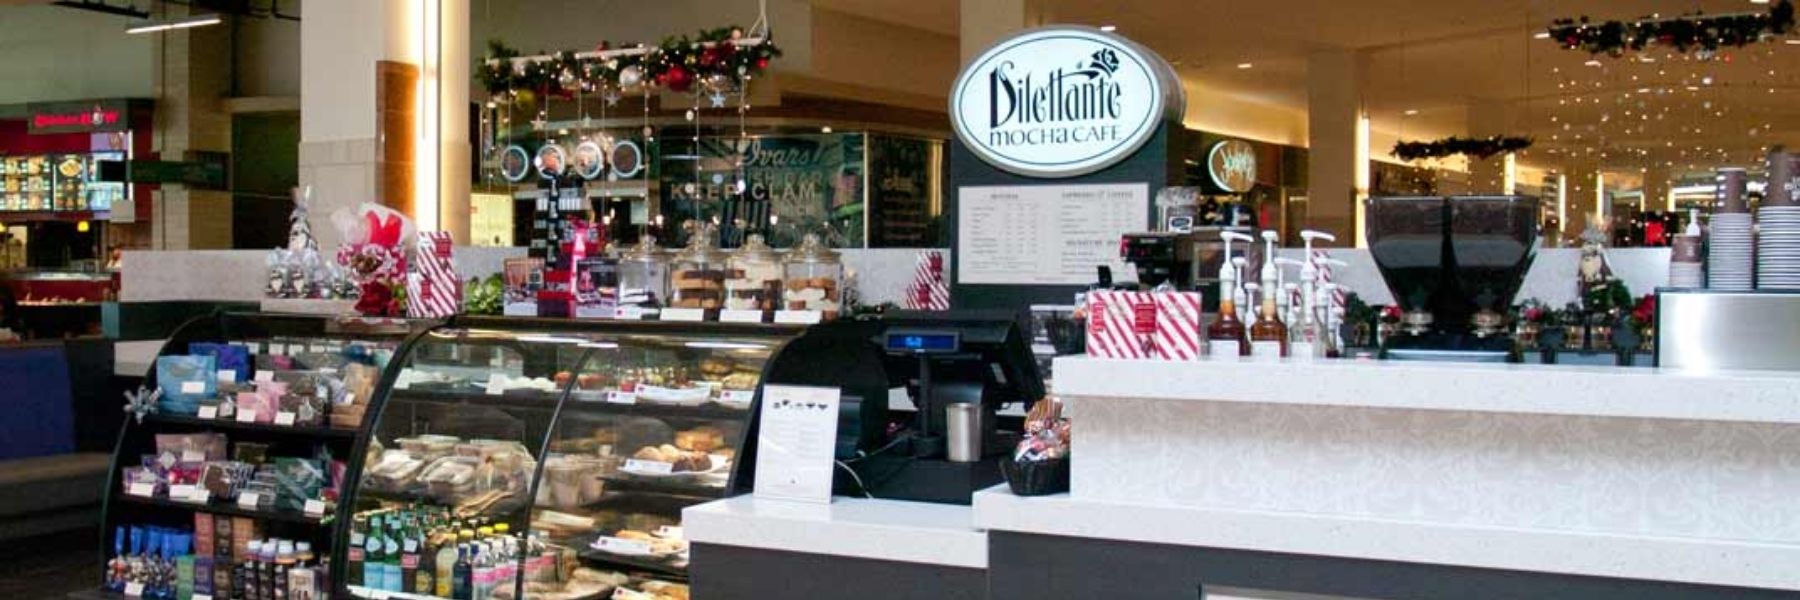 Dilettante Chocolates Mocha Café in Westfield Southcenter Mall